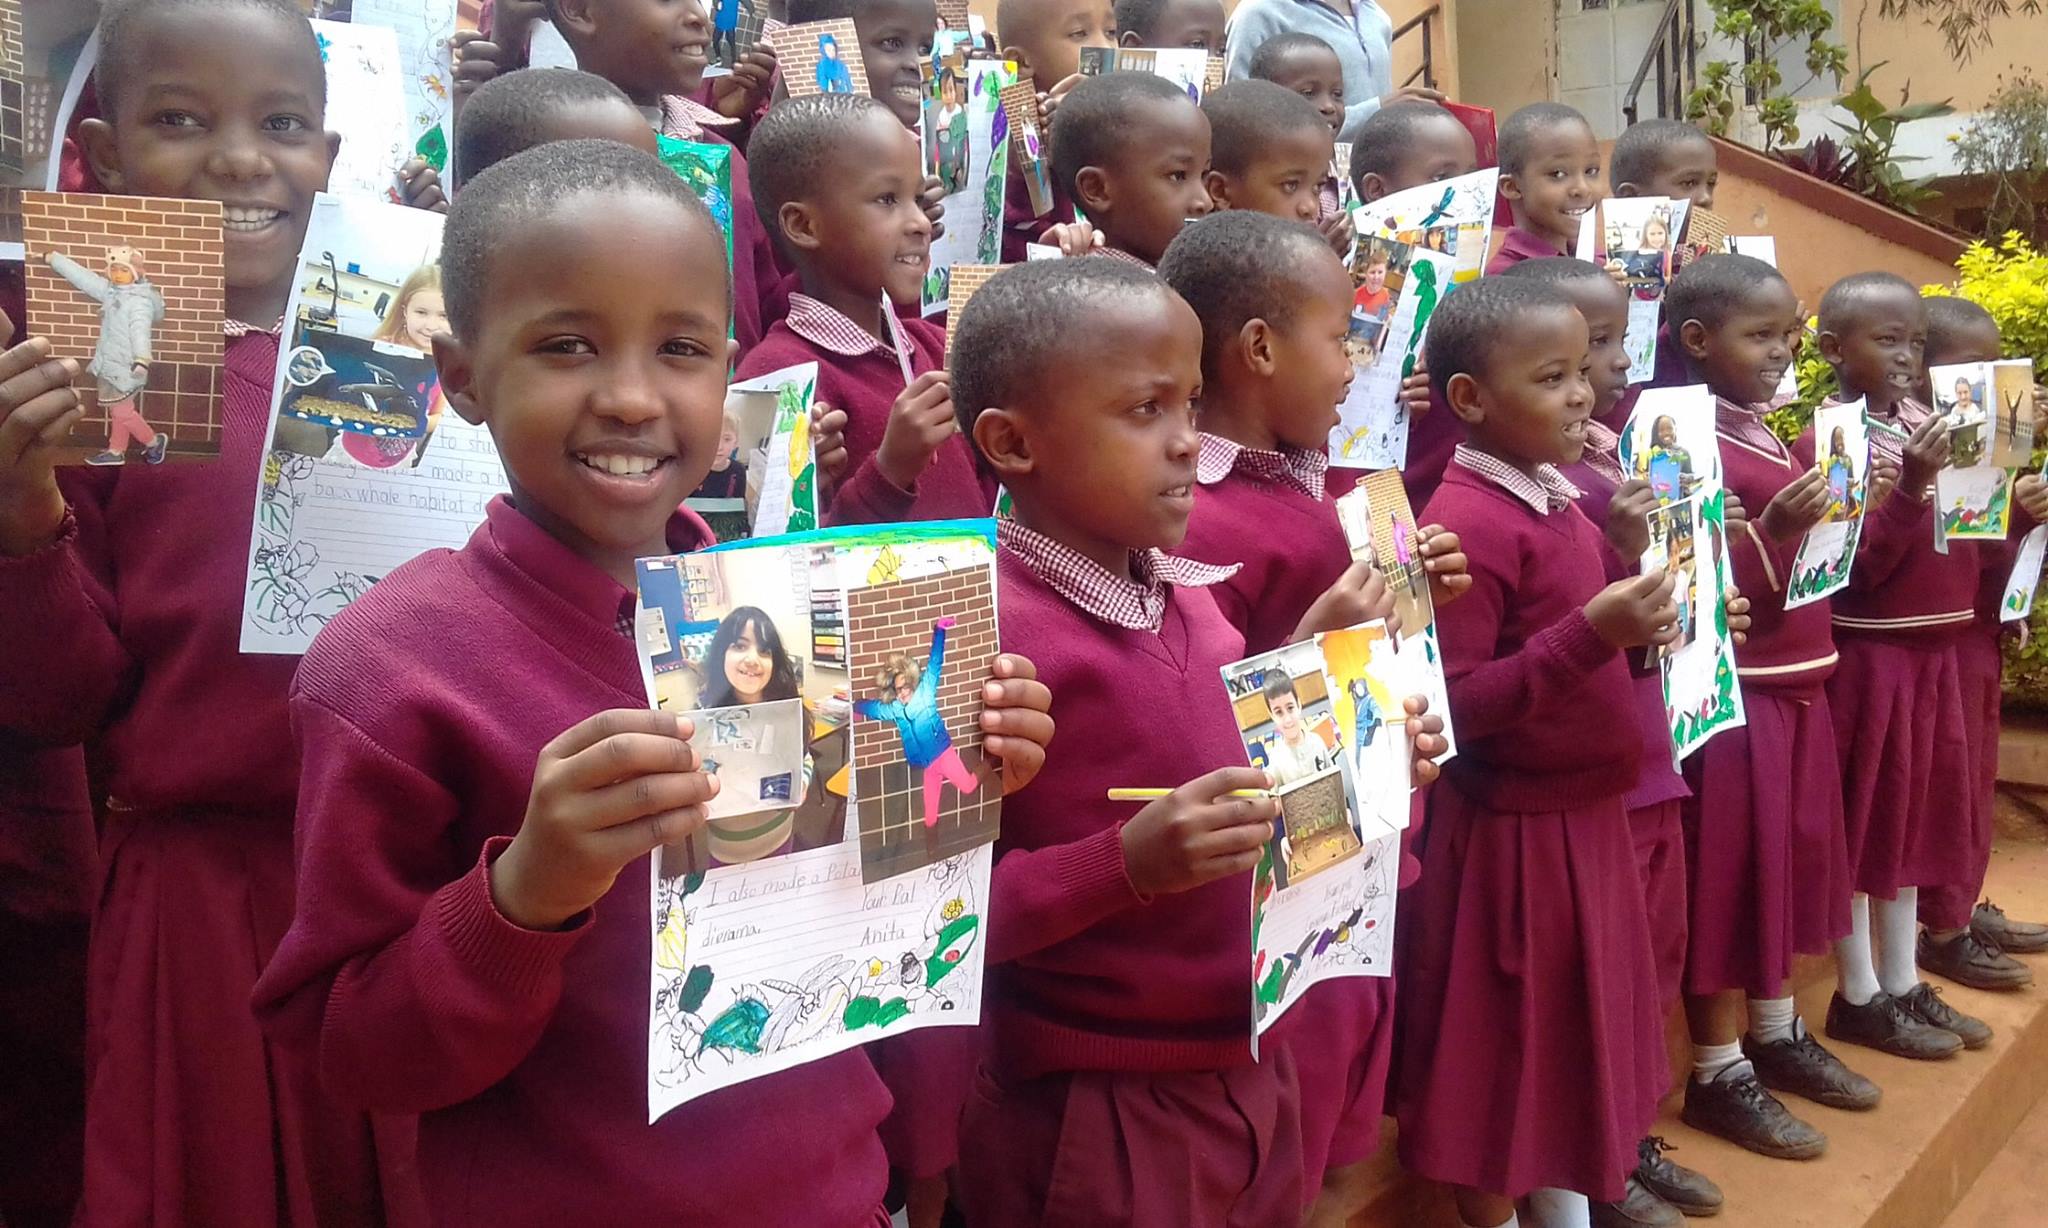 Sister School Program students in Tanzania